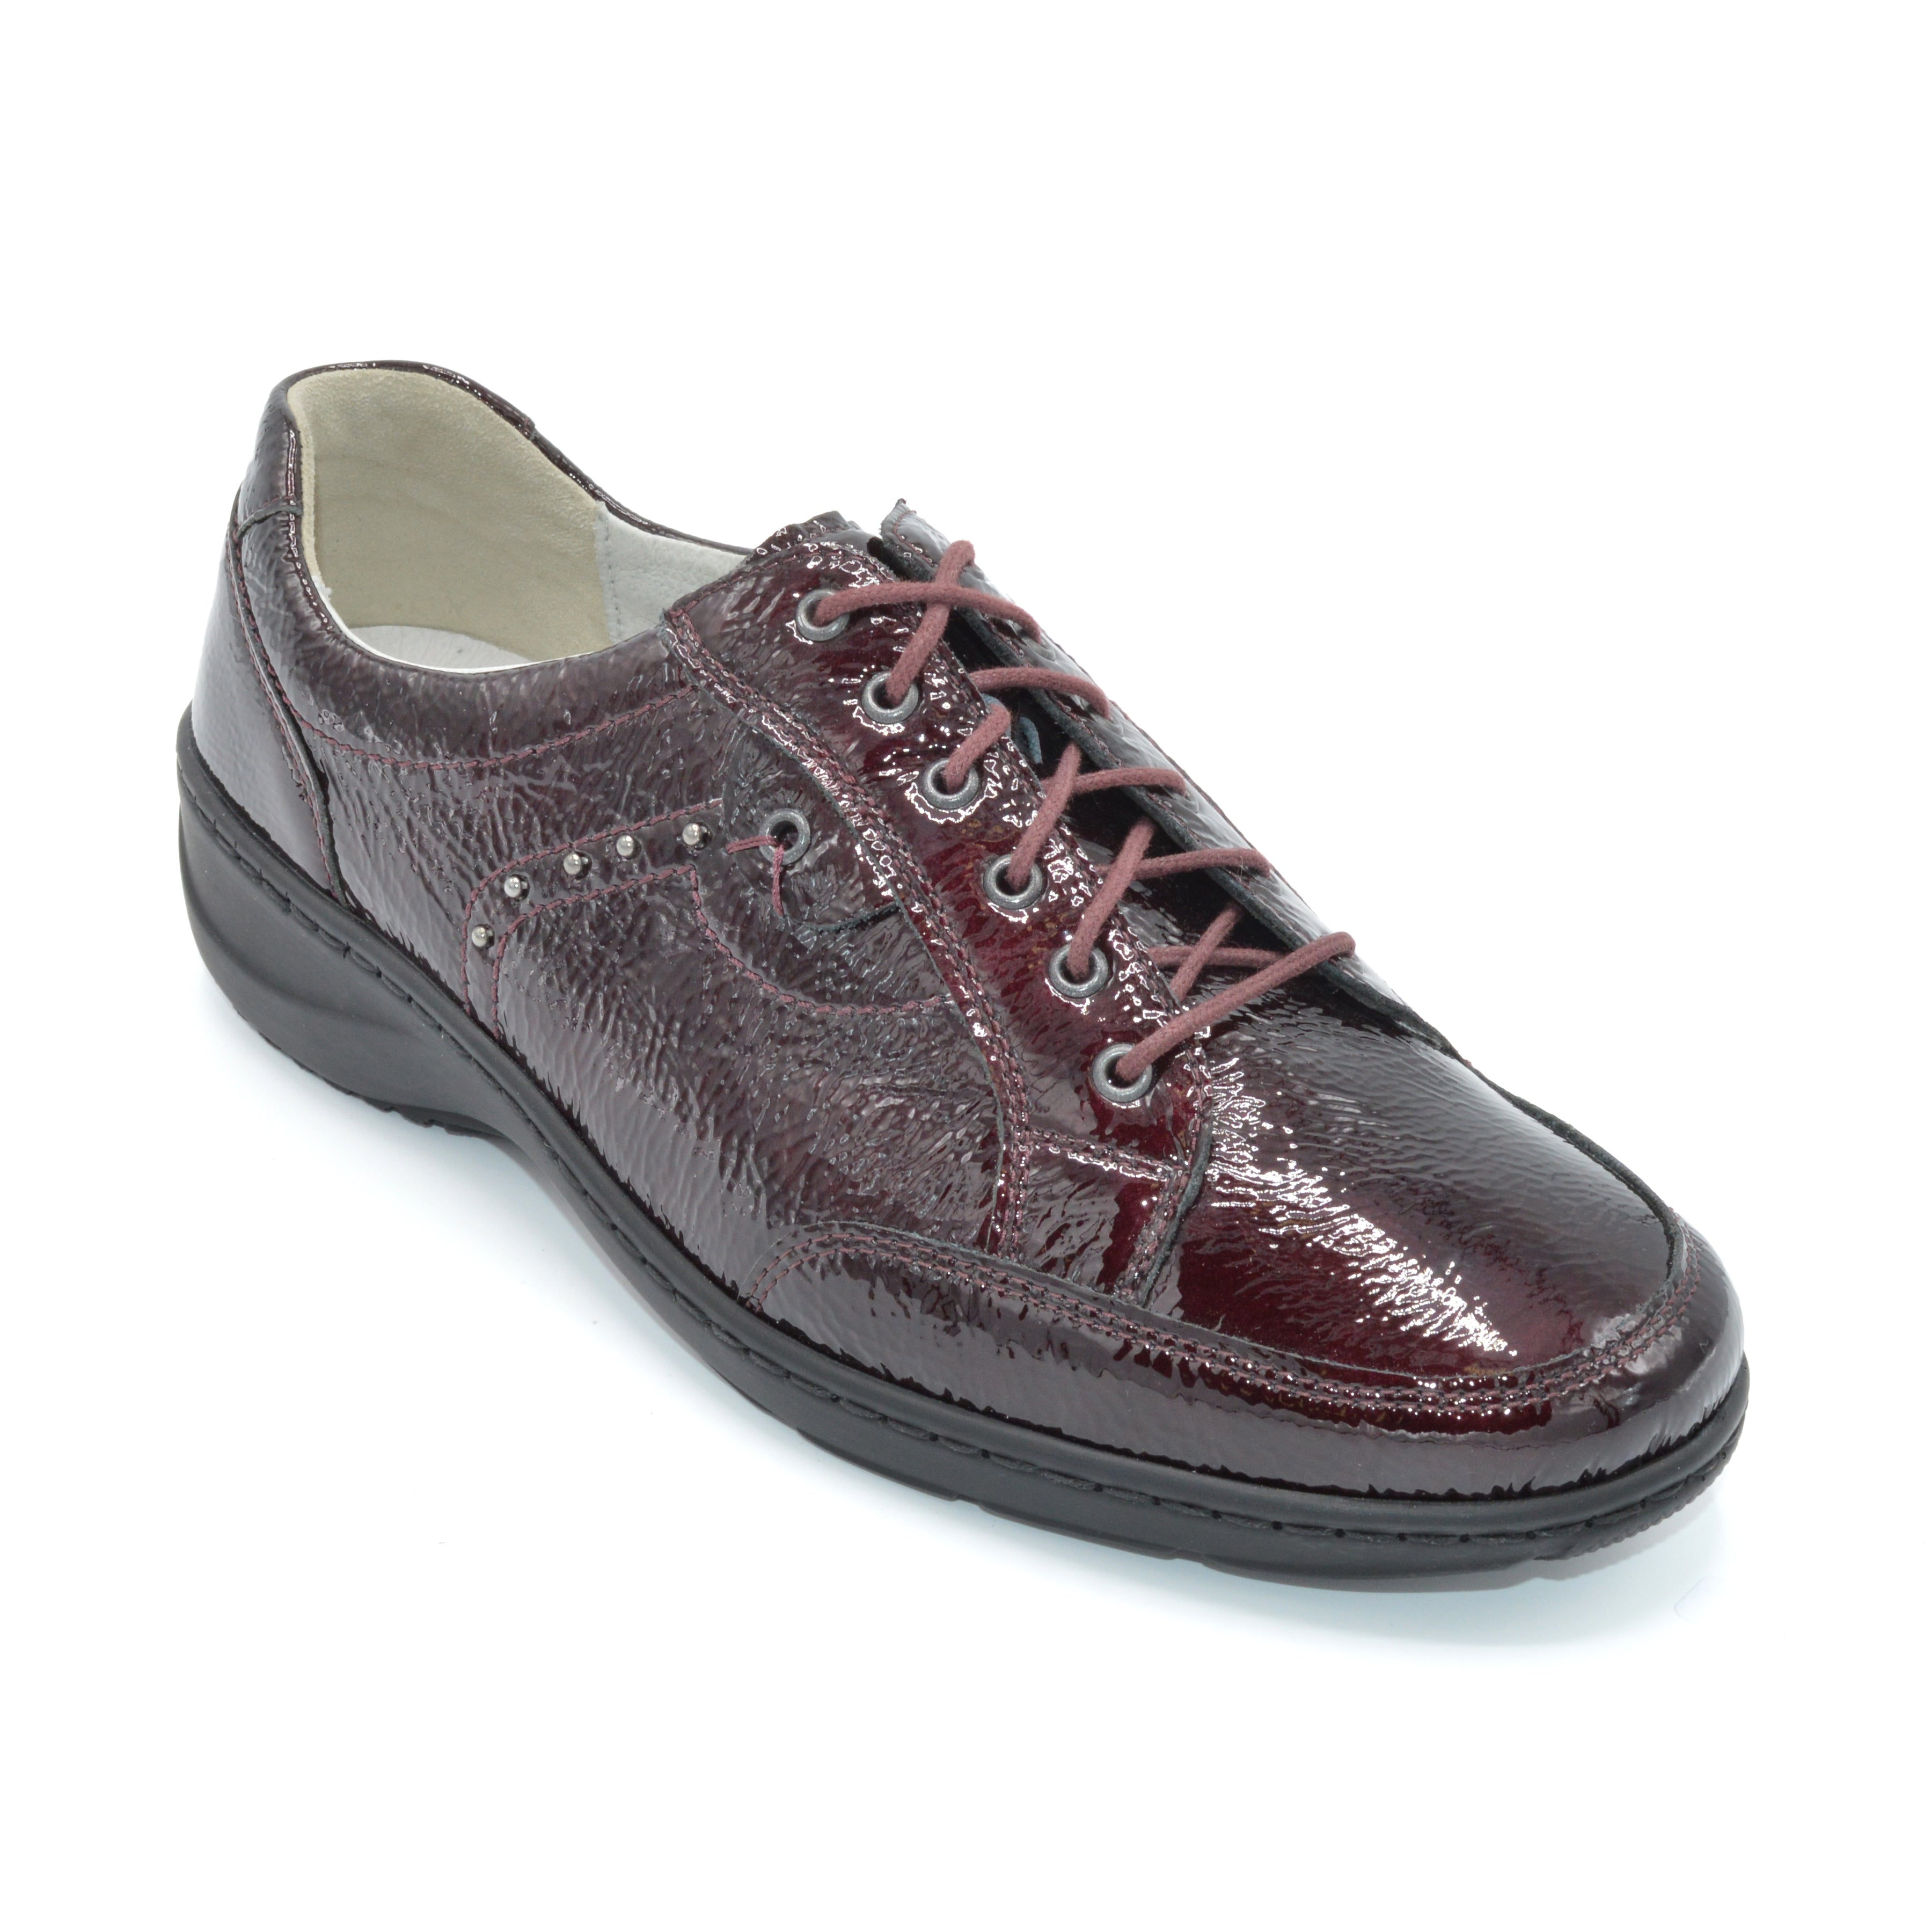  Ladies Burgundy Velcro Shoe For Bunions